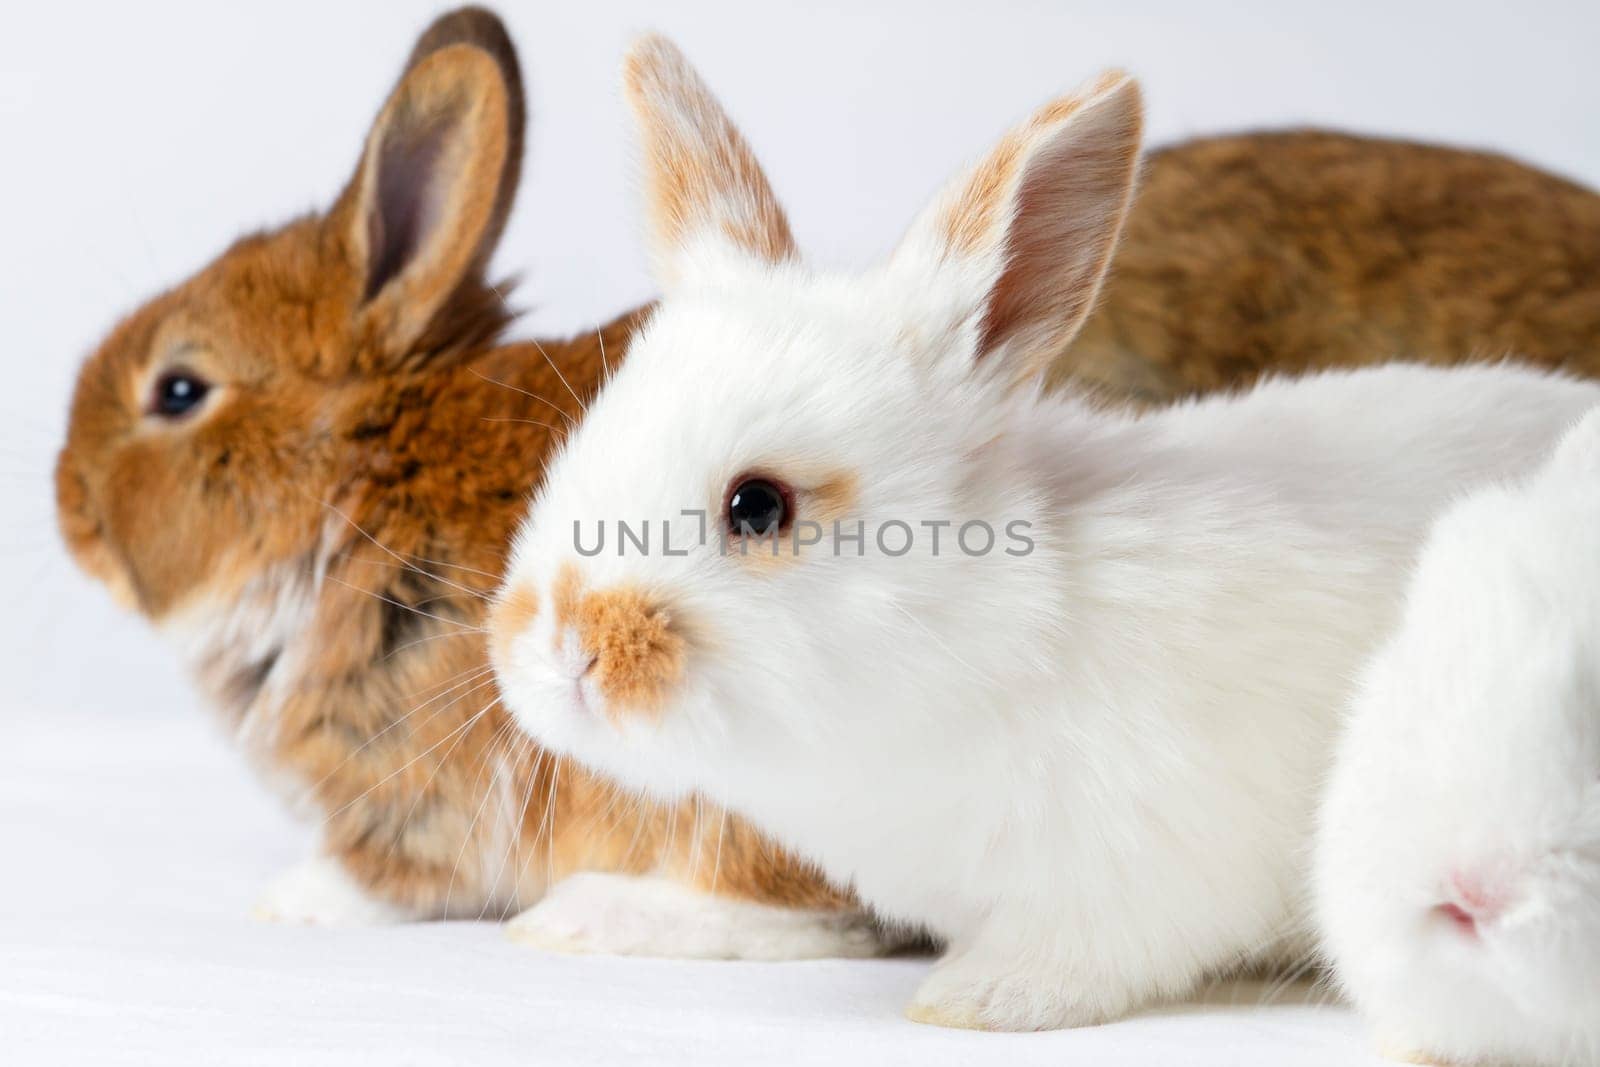 rabbits on a white background by drakuliren